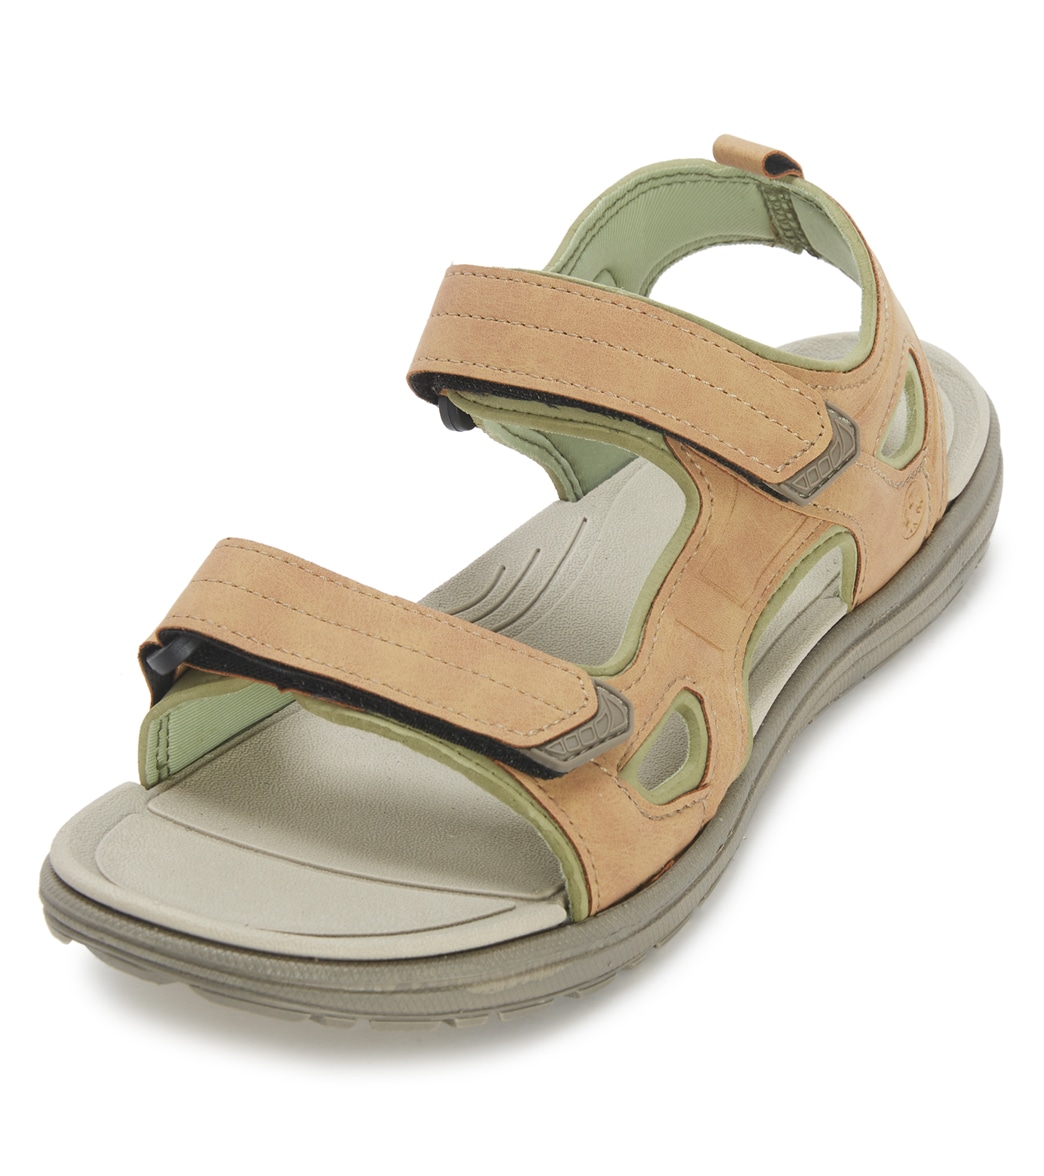 Northside Women's Riverside Lite Sport Sandals - Tan/Sage 060 - Swimoutlet.com